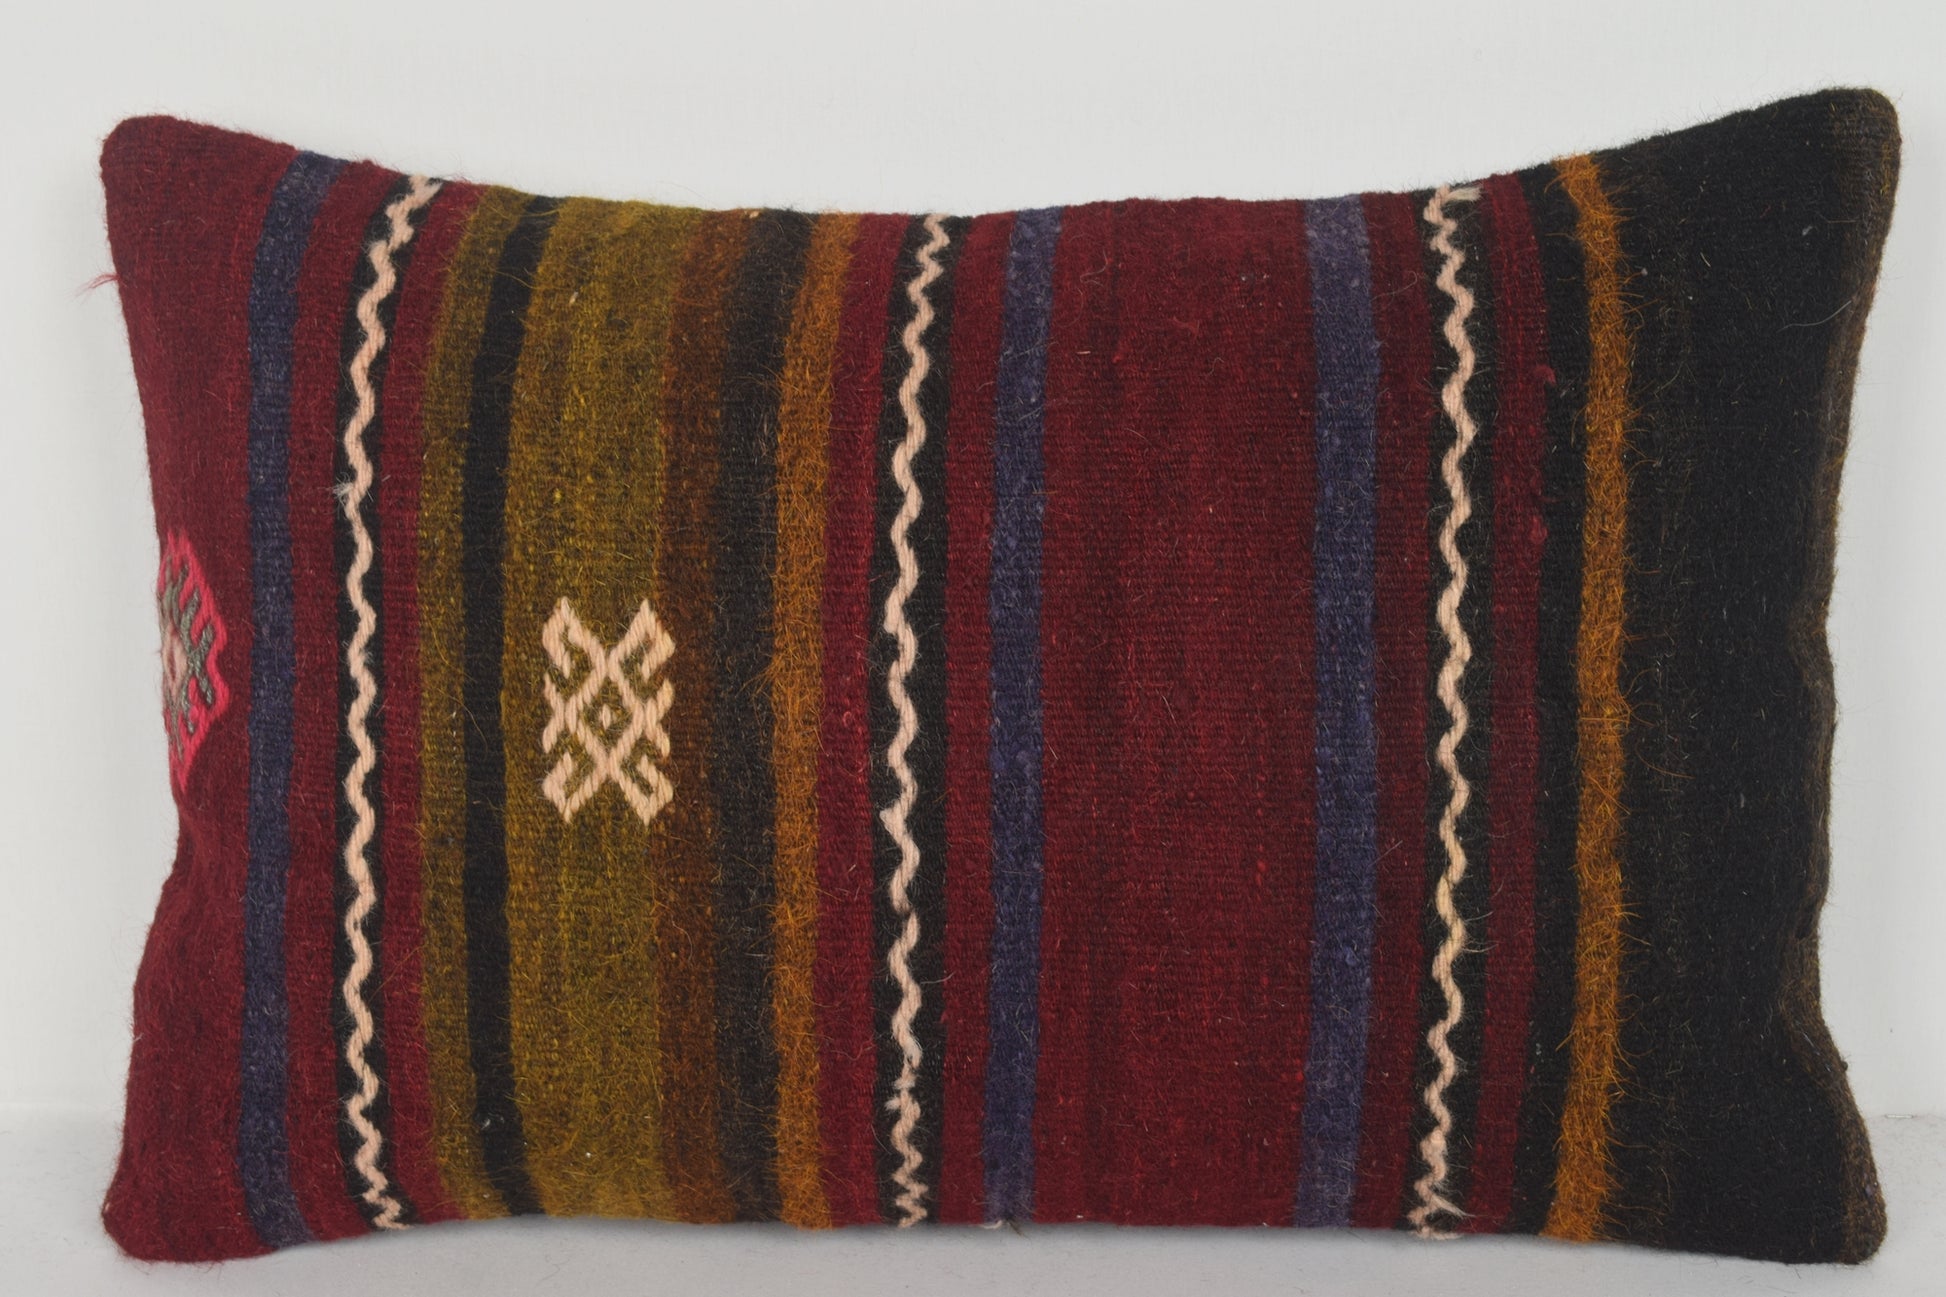 Kilim Pillows from Turkey E00447 Lumbar Livingroom Culture Soft African